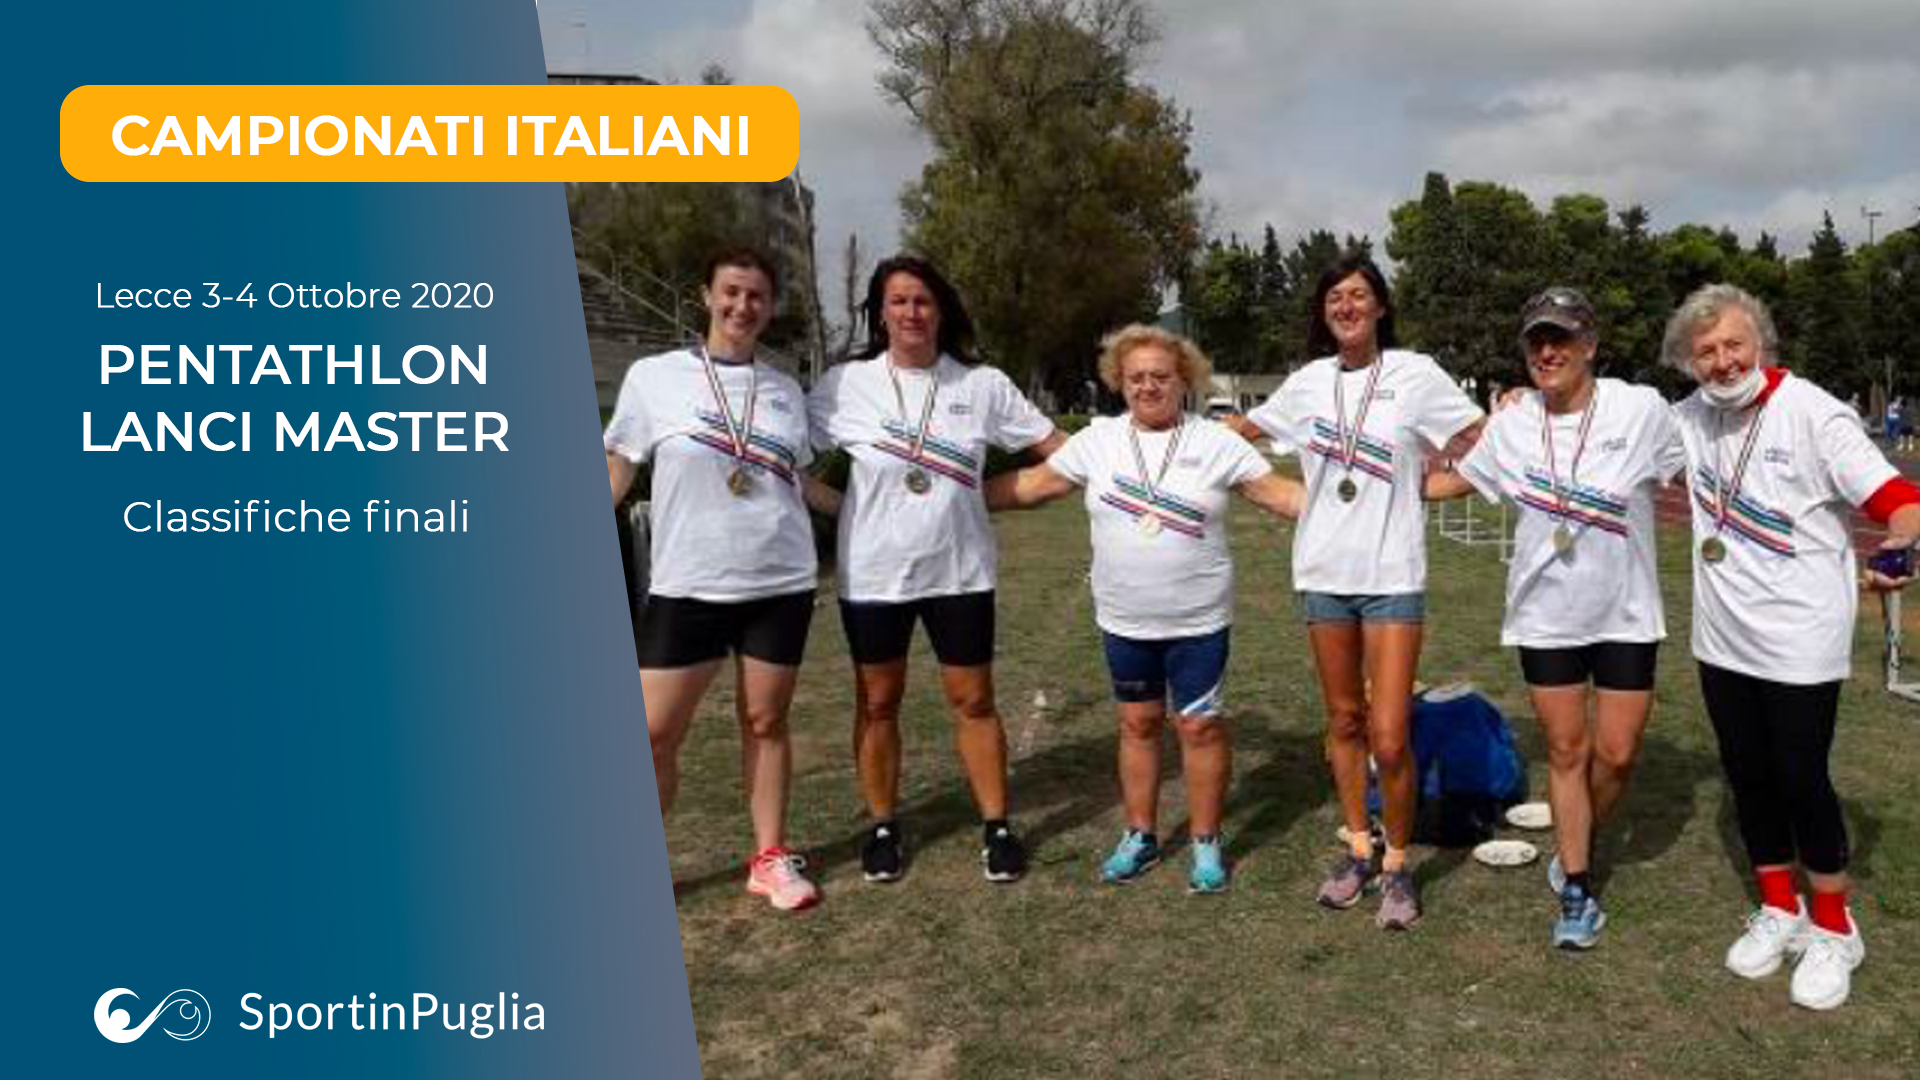 Campionati Italiani Pentathlon Lanci Master - Lecce 2020